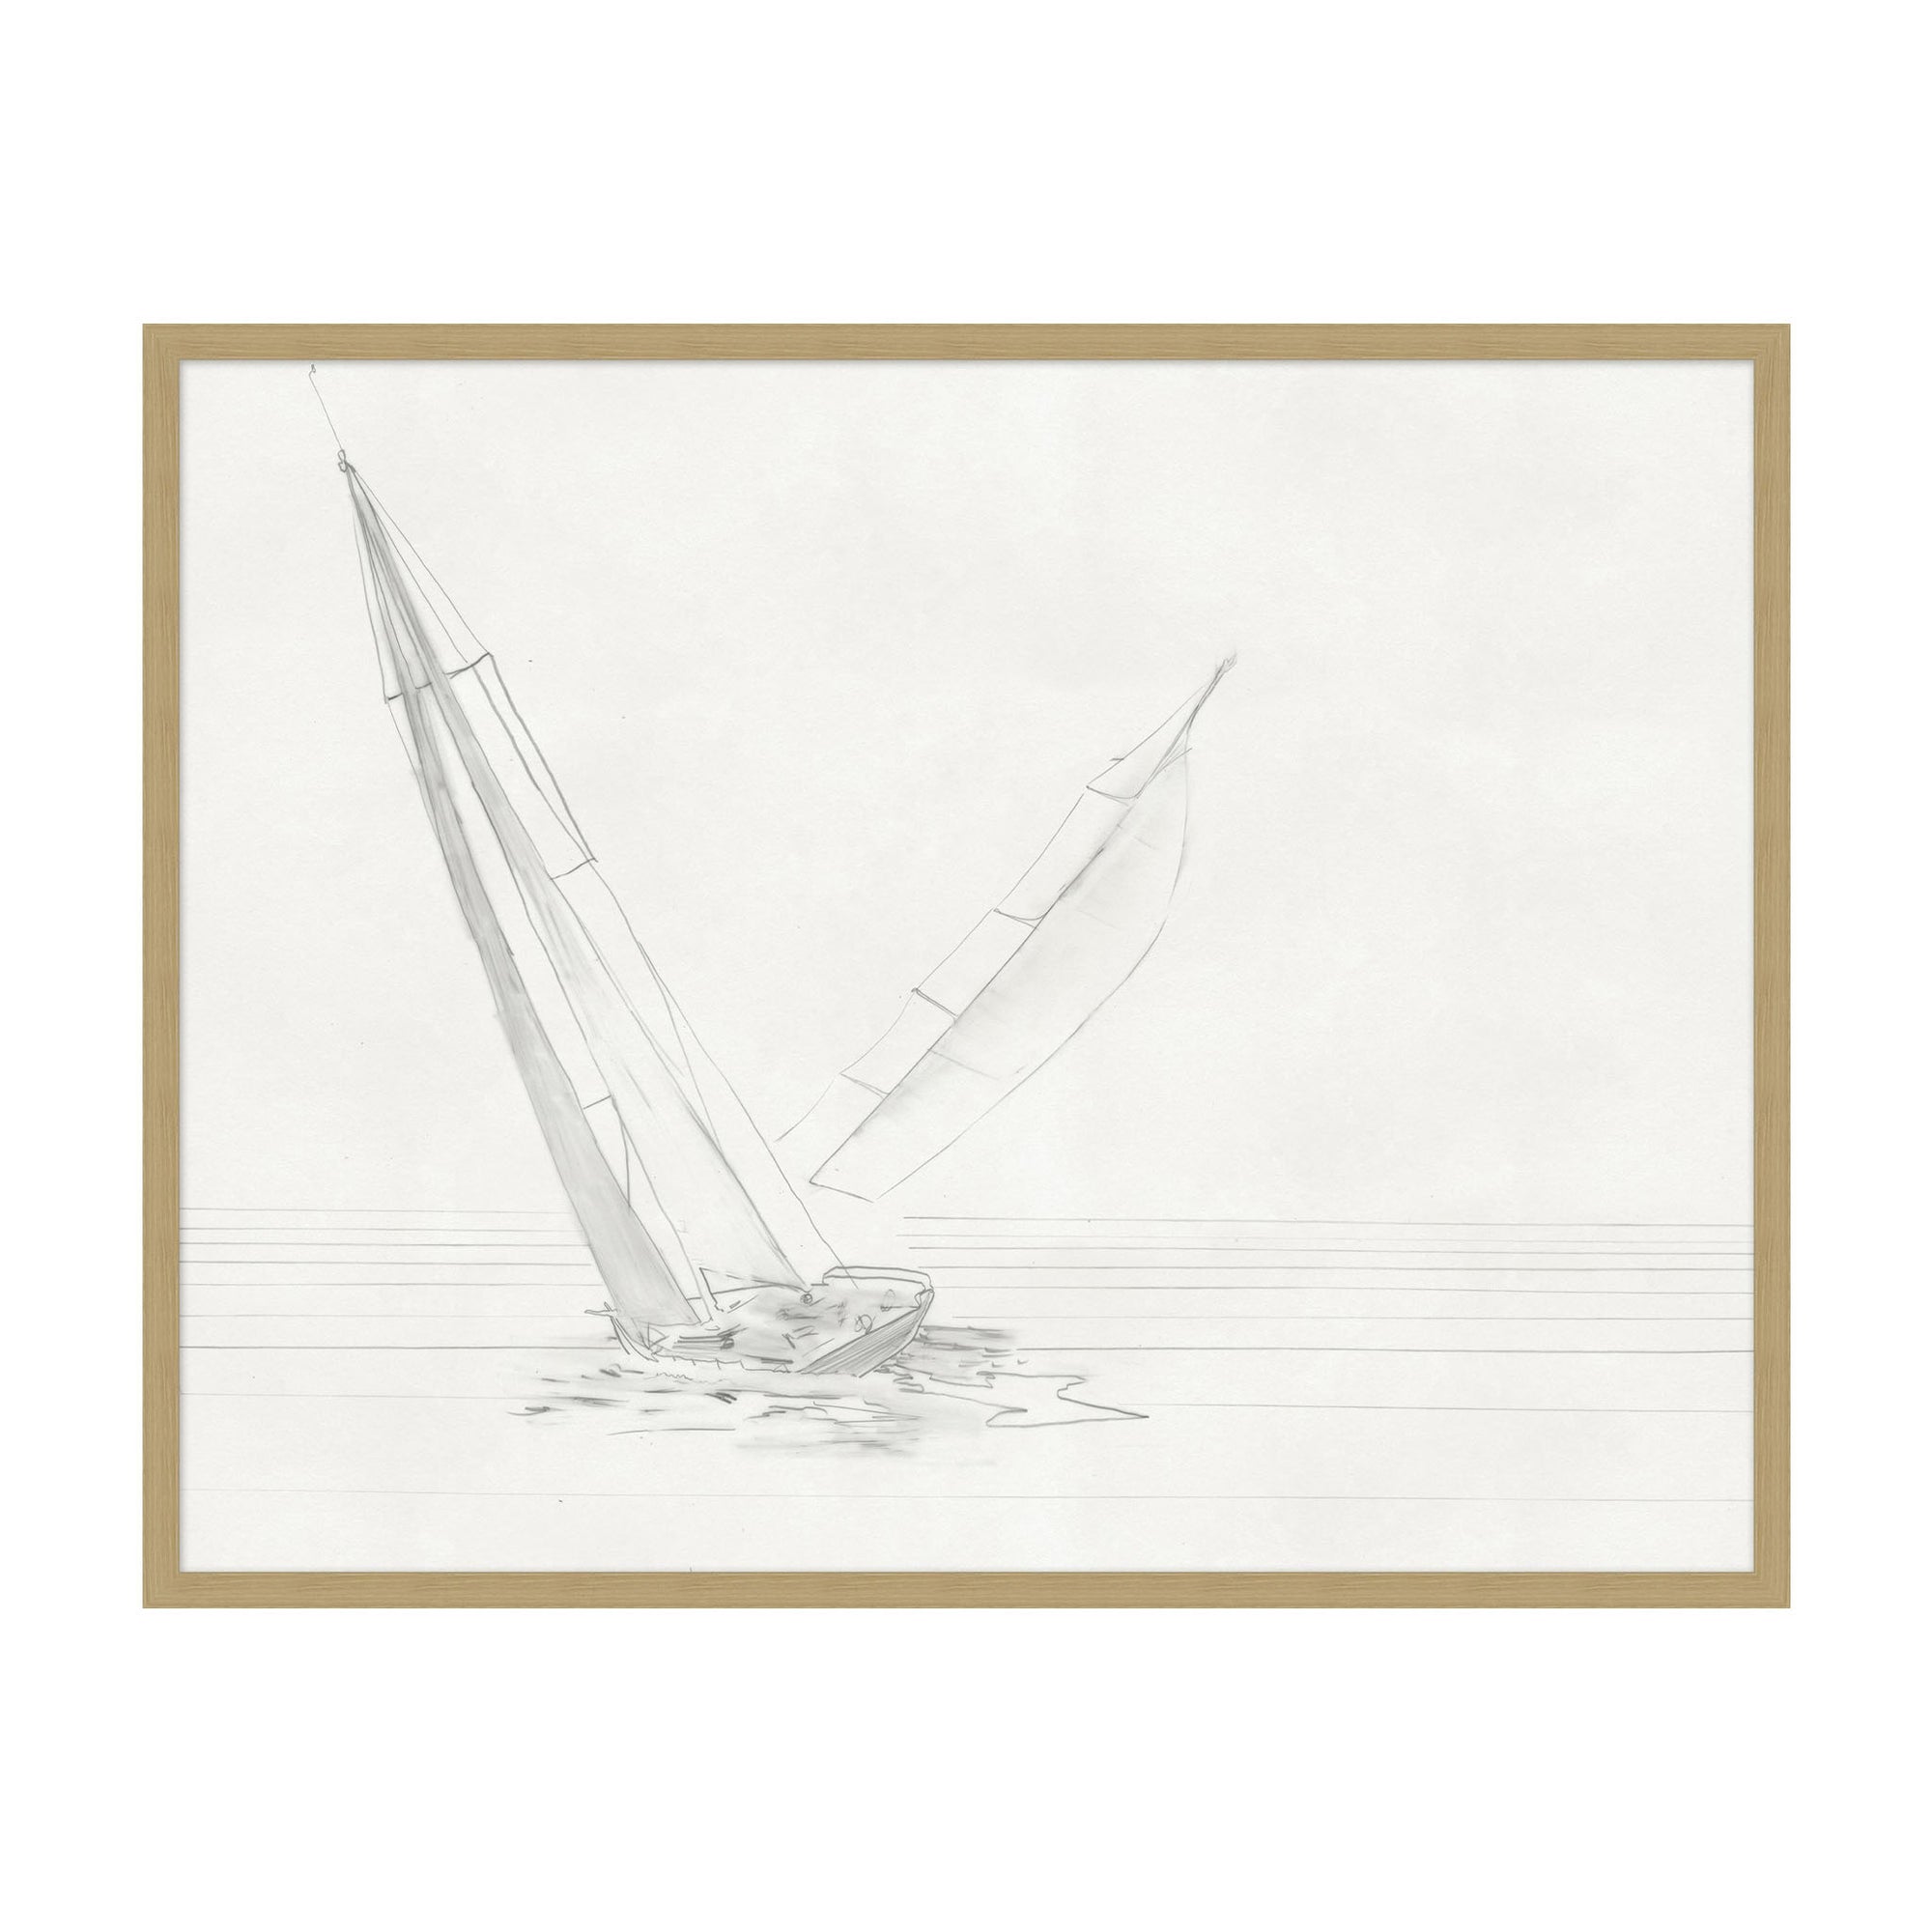 Sailors Sketch 2